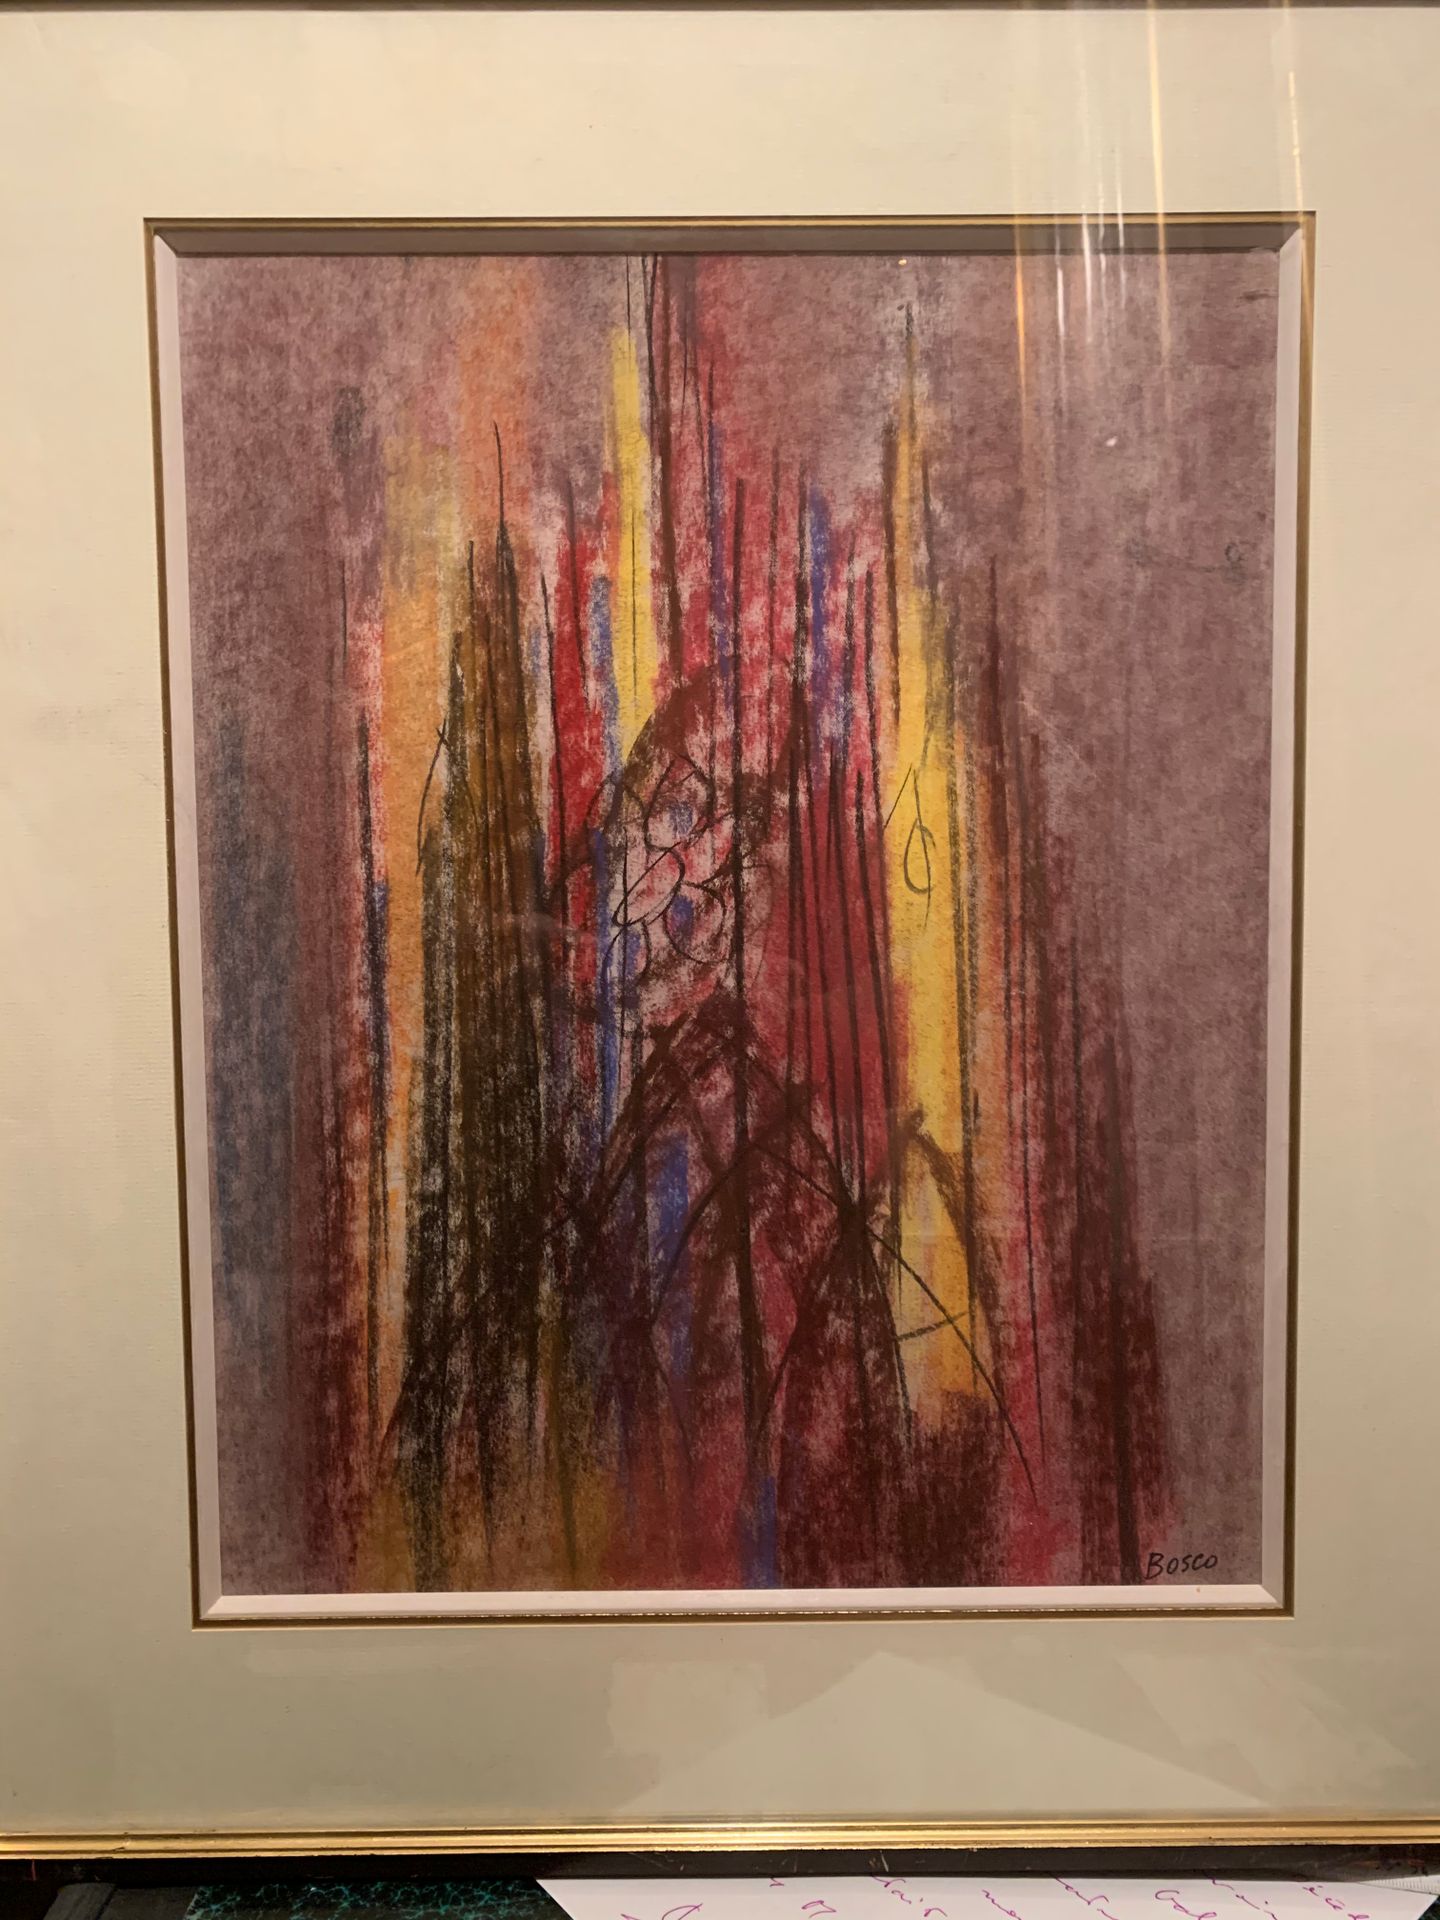 Null 皮埃尔-博斯克 (1909-1993)

无题

右下角有签名的粉彩画

39 x 31,5 cm